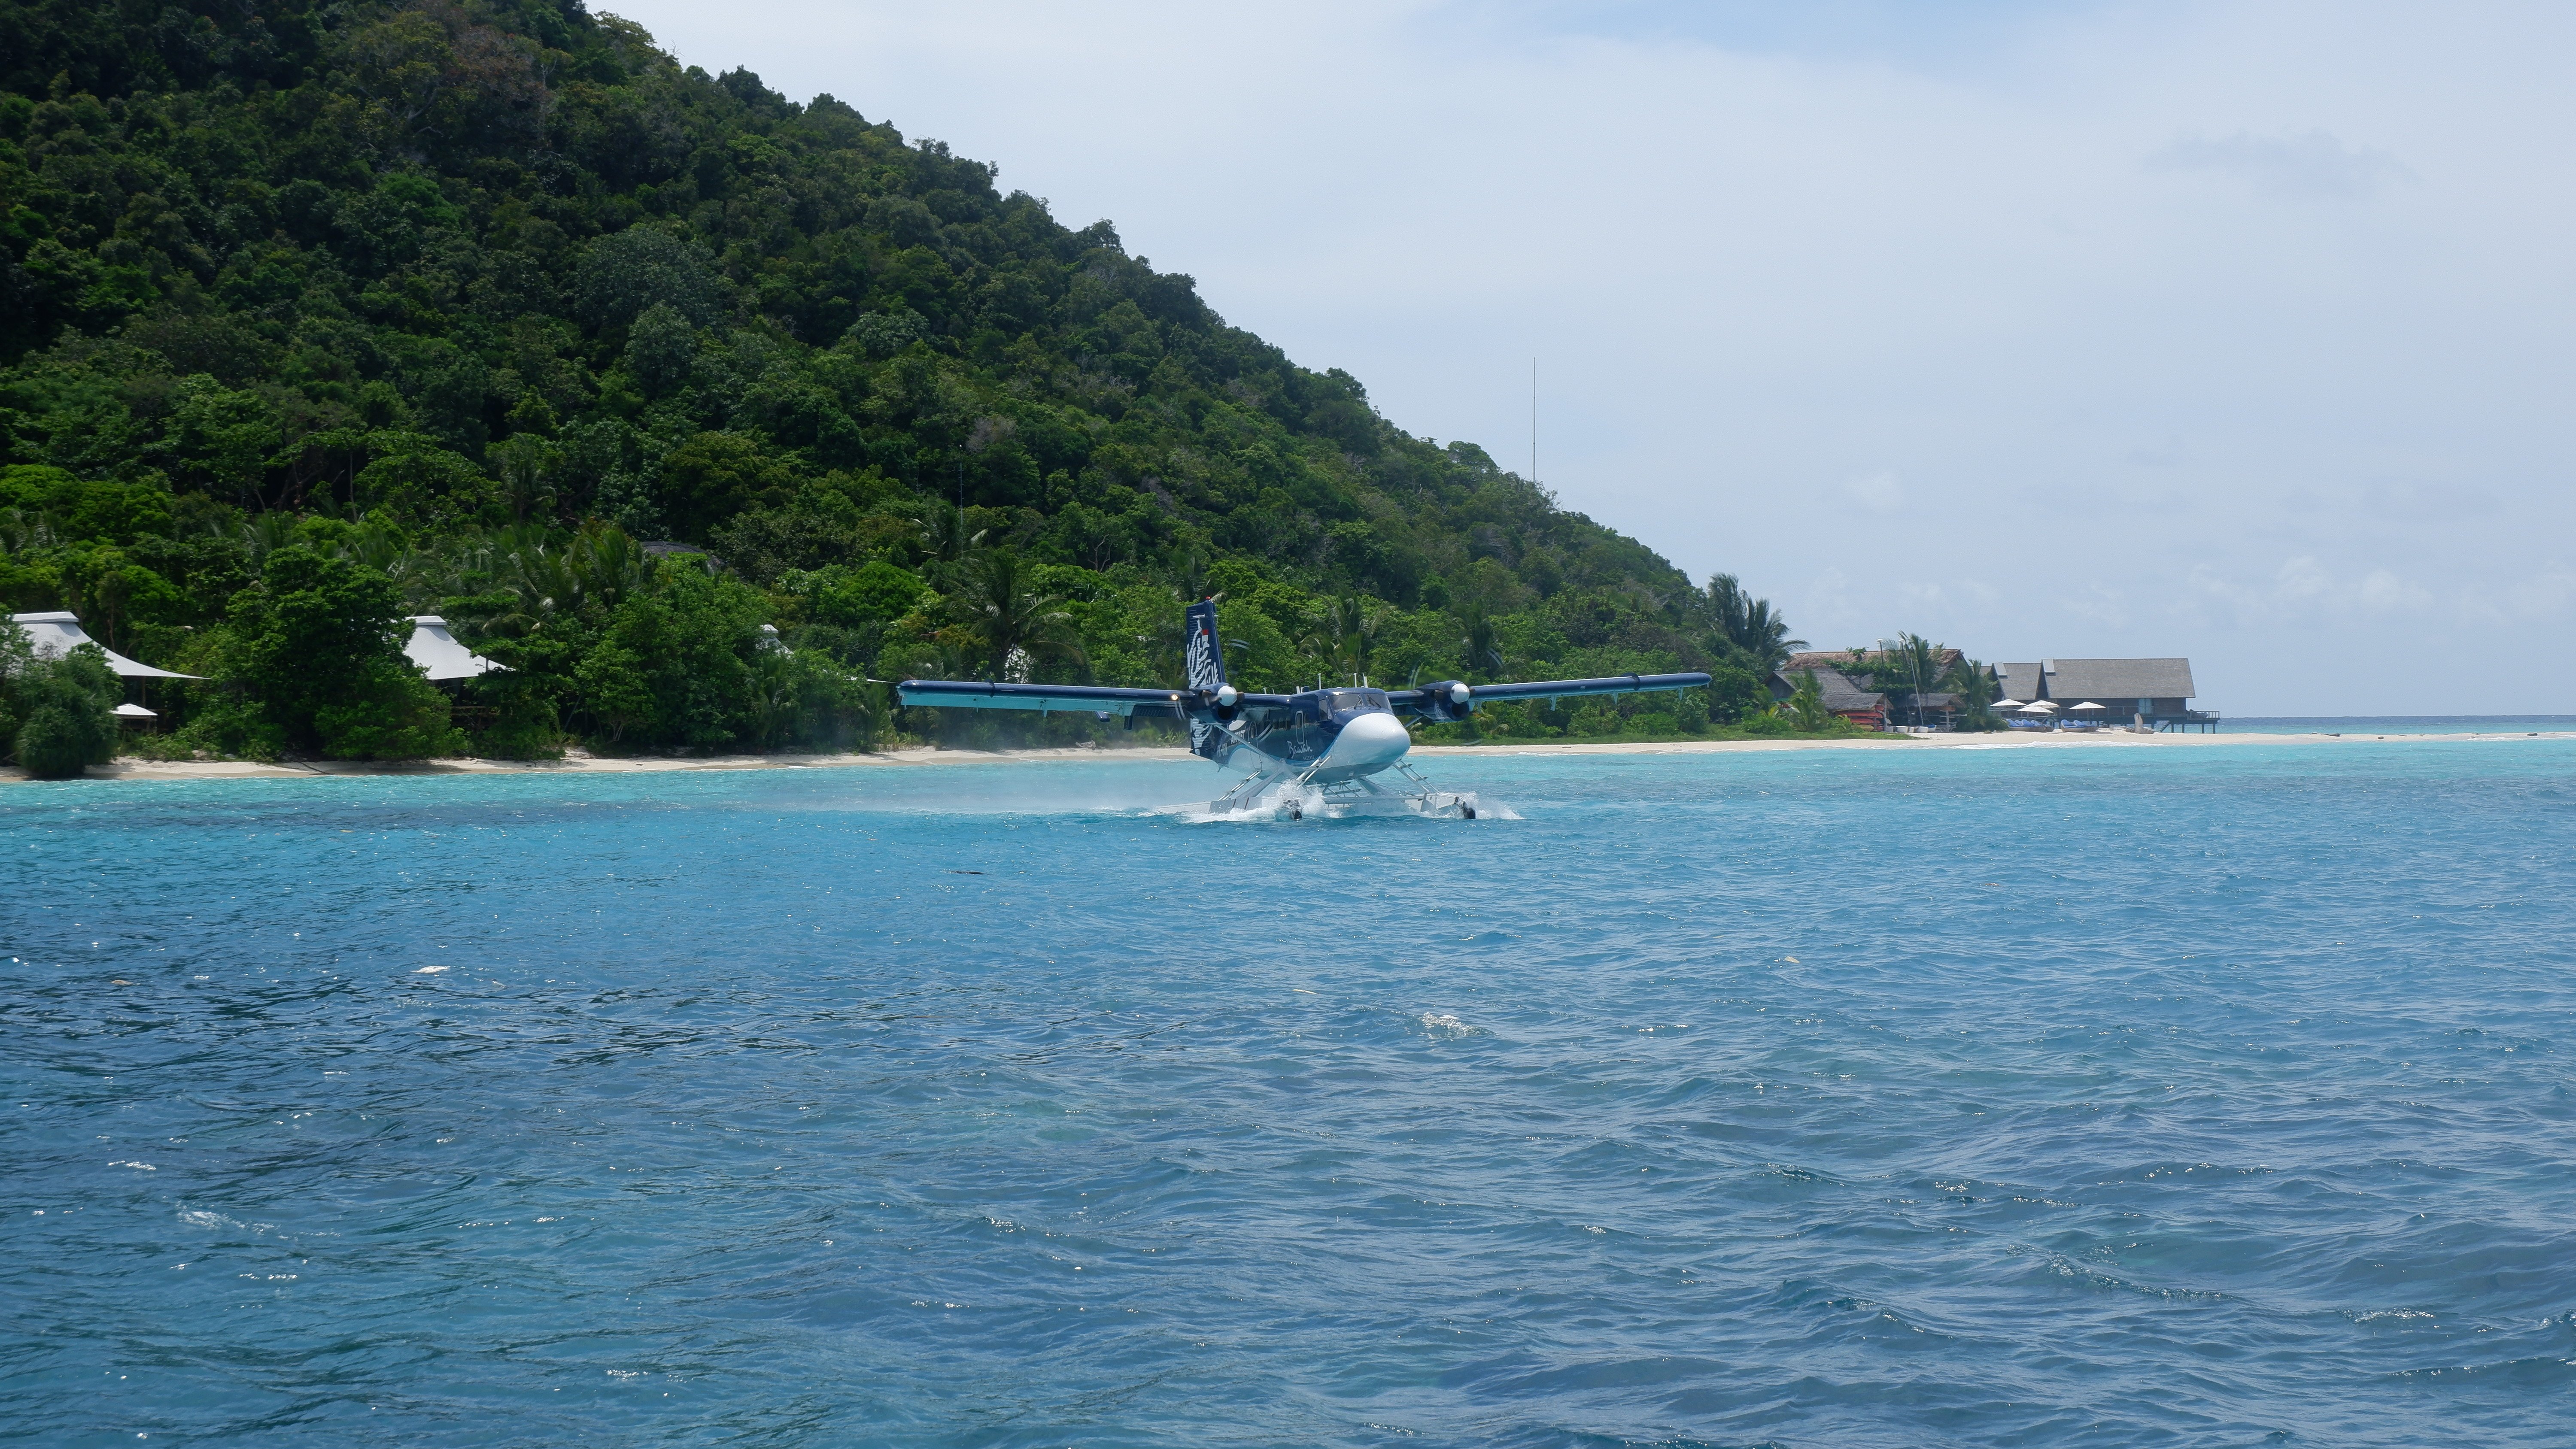 Bawah Reserve Indonesia, Blue Seaplane 